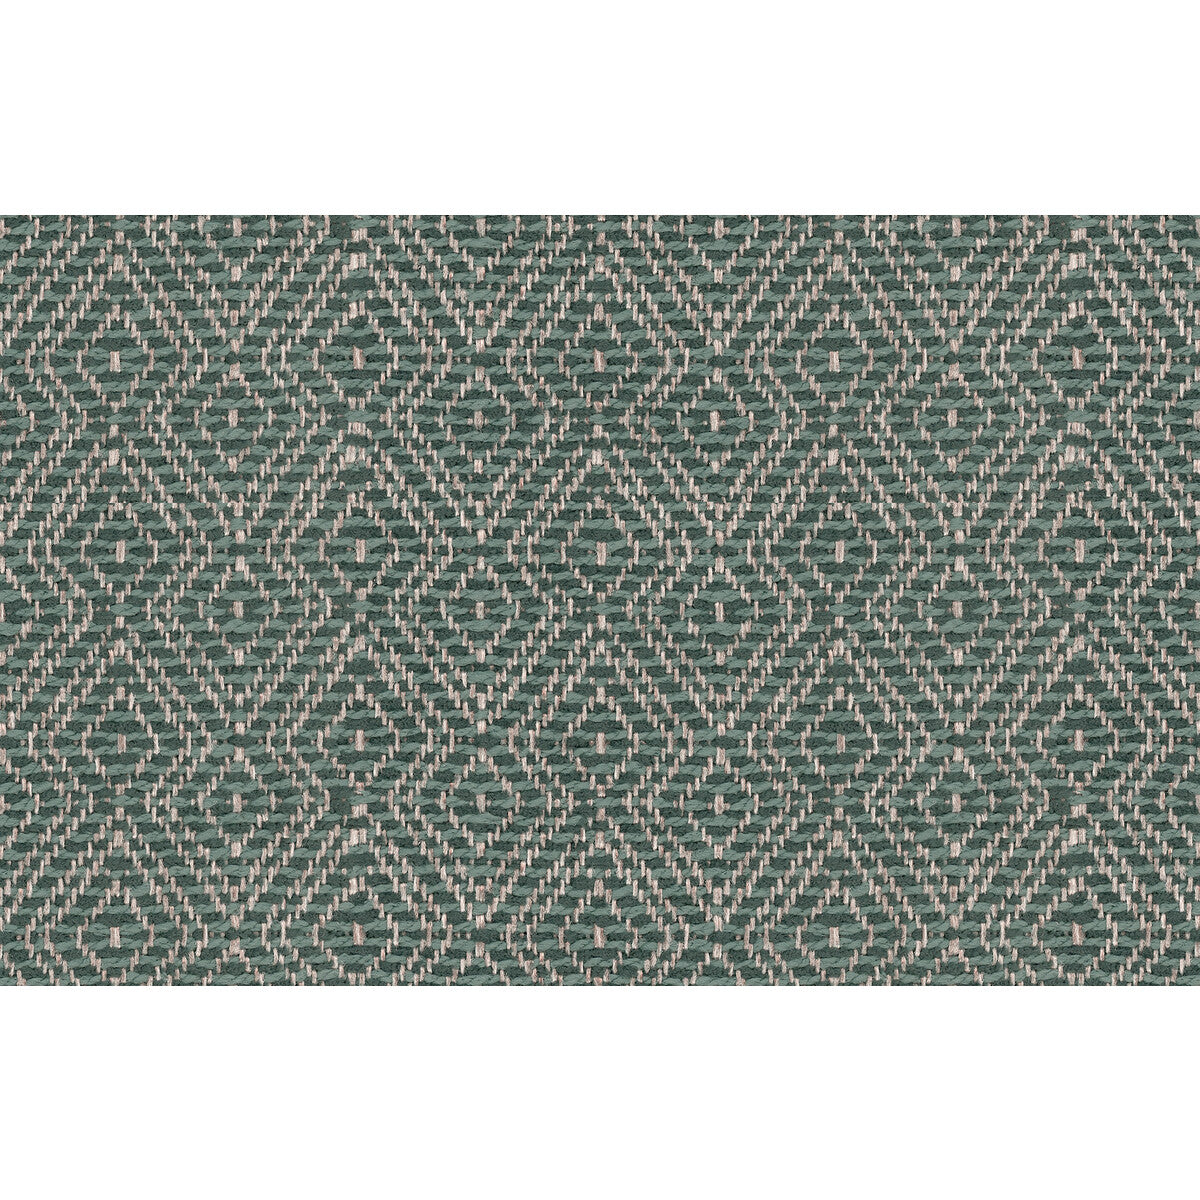 Kravet Smart fabric in 34334-35 color - pattern 34334.35.0 - by Kravet Smart